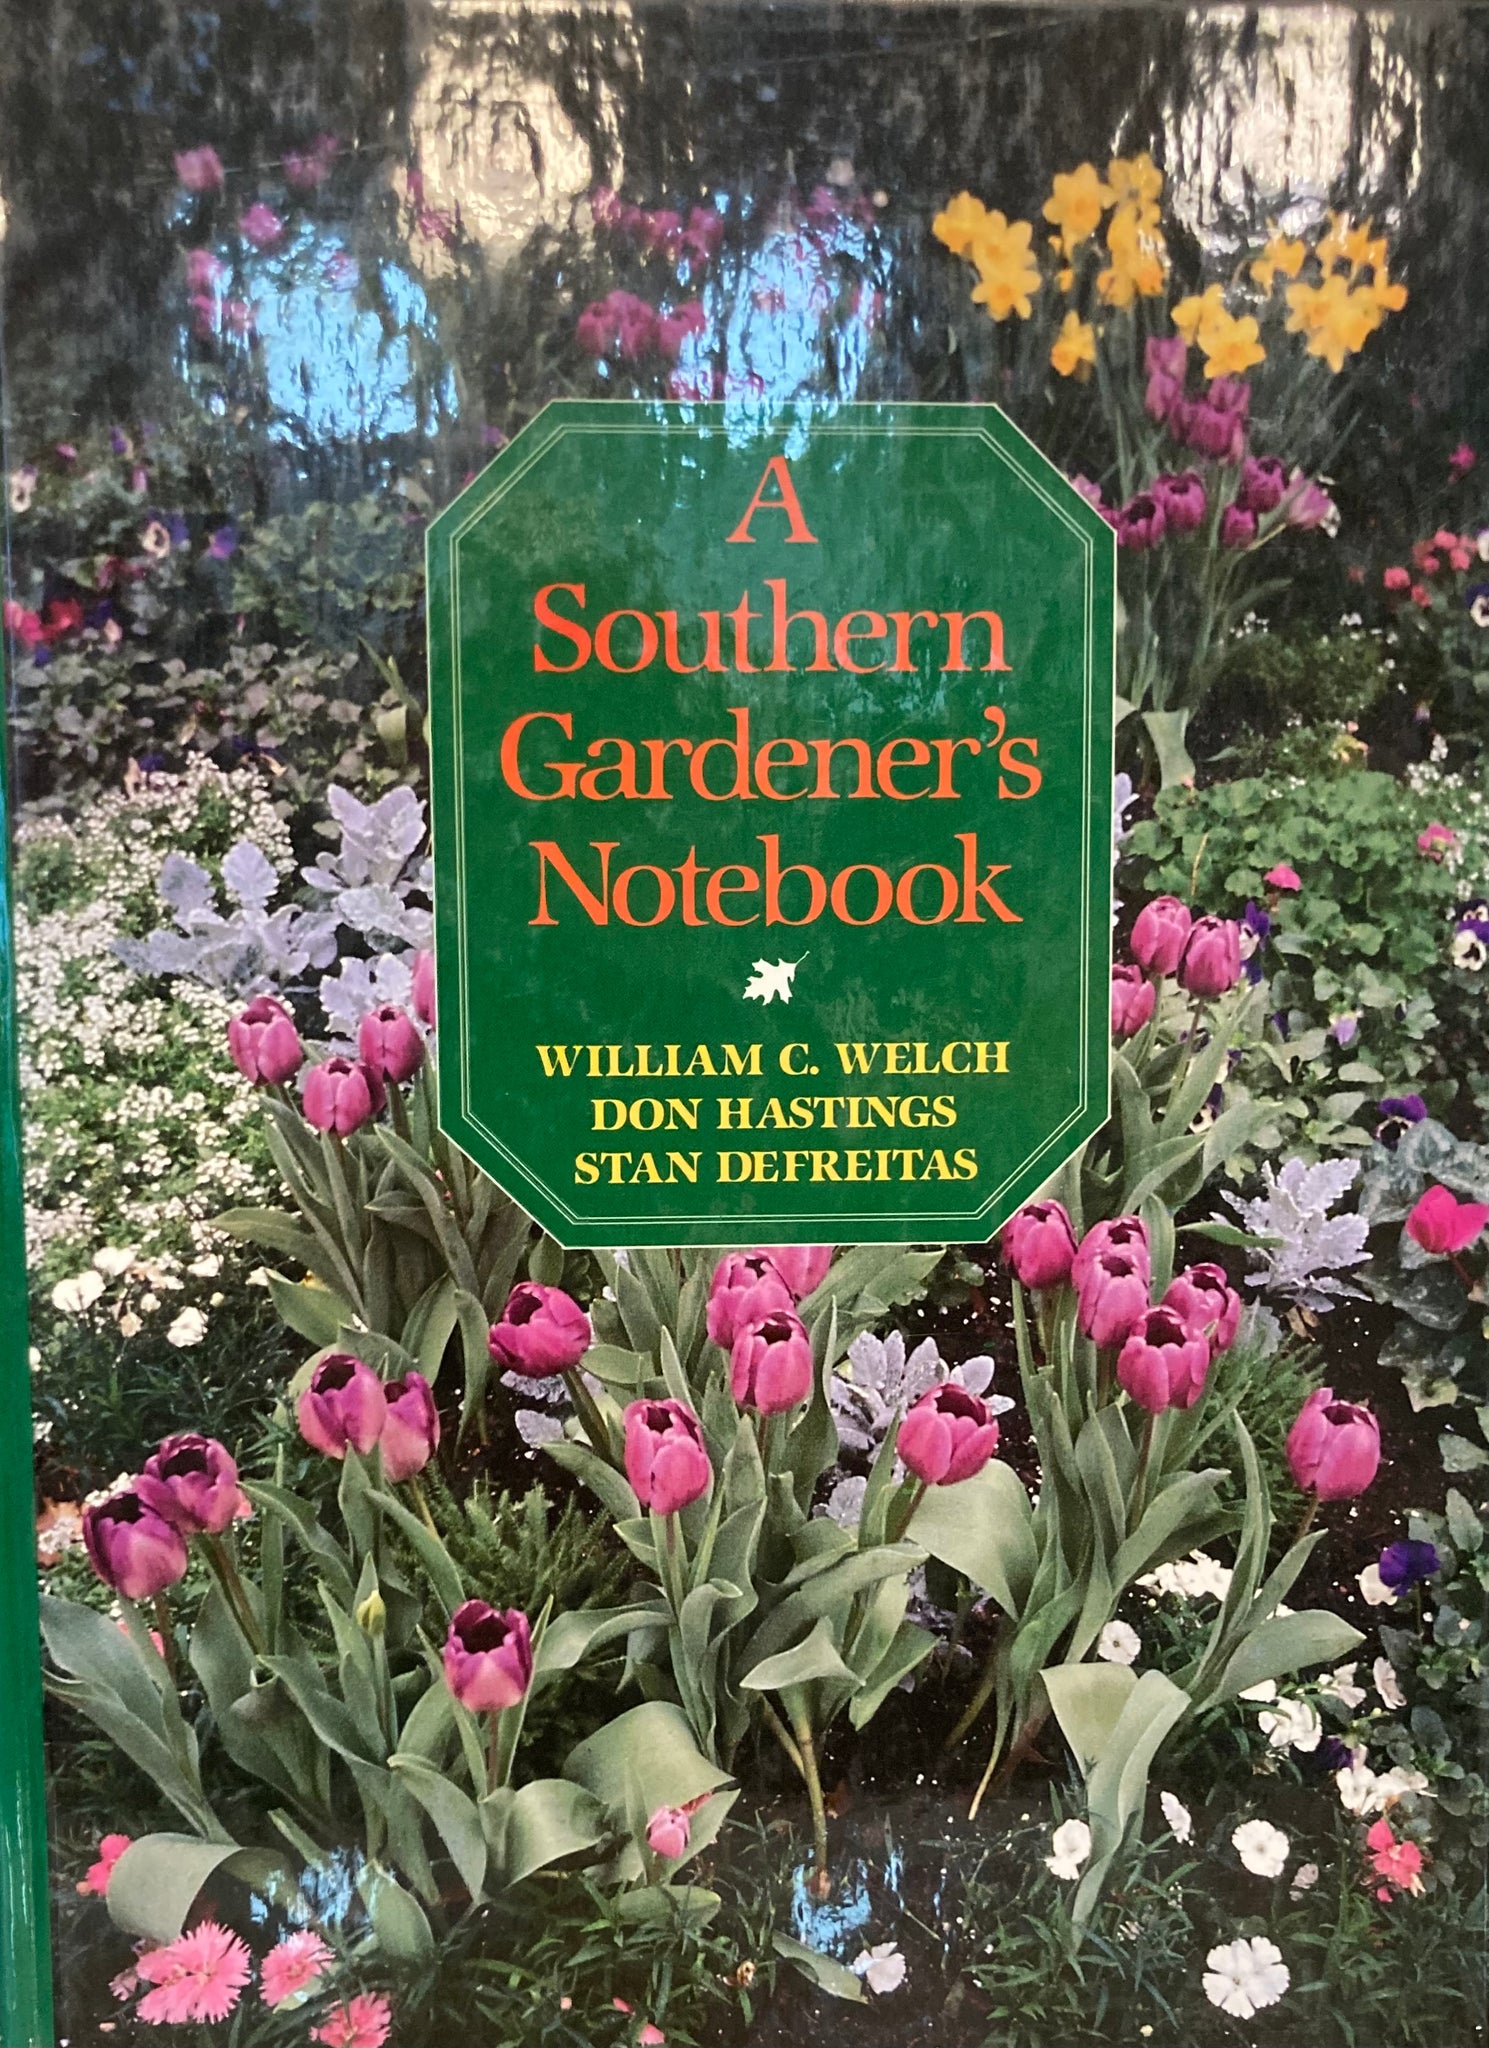 A Southern Gardener's Notebook